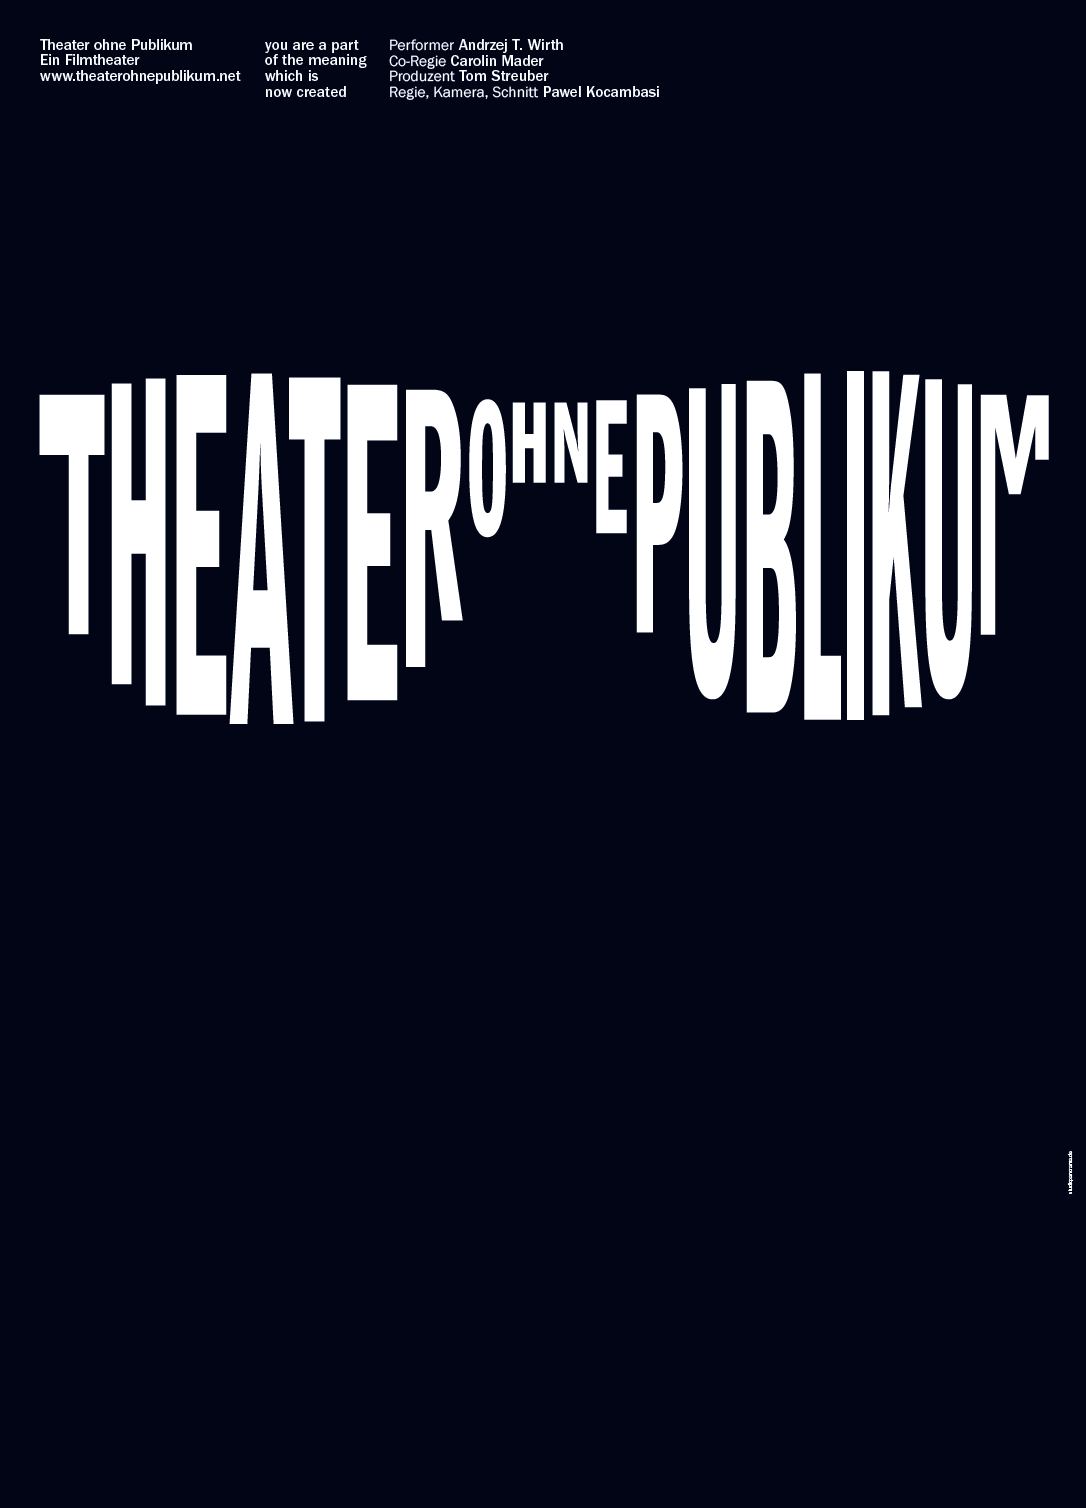 Theater ohne Publikum Plakat - panorama studio für visuelle kommunikation